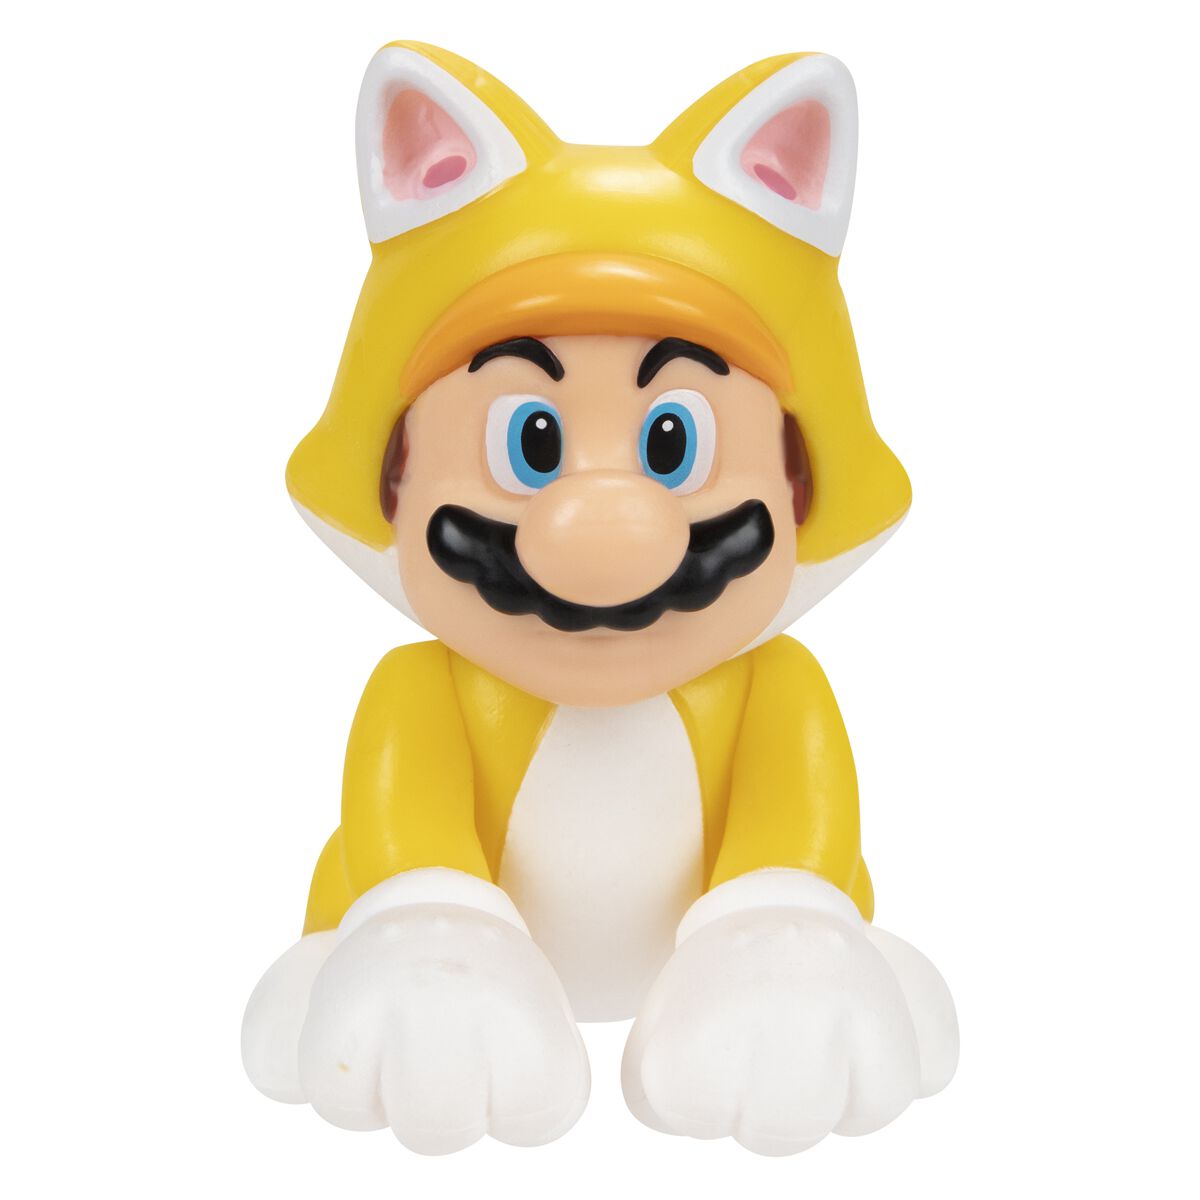 Figurine de collection Gaming de Super Mario - Chat Mario - pour Unisexe - multicolore